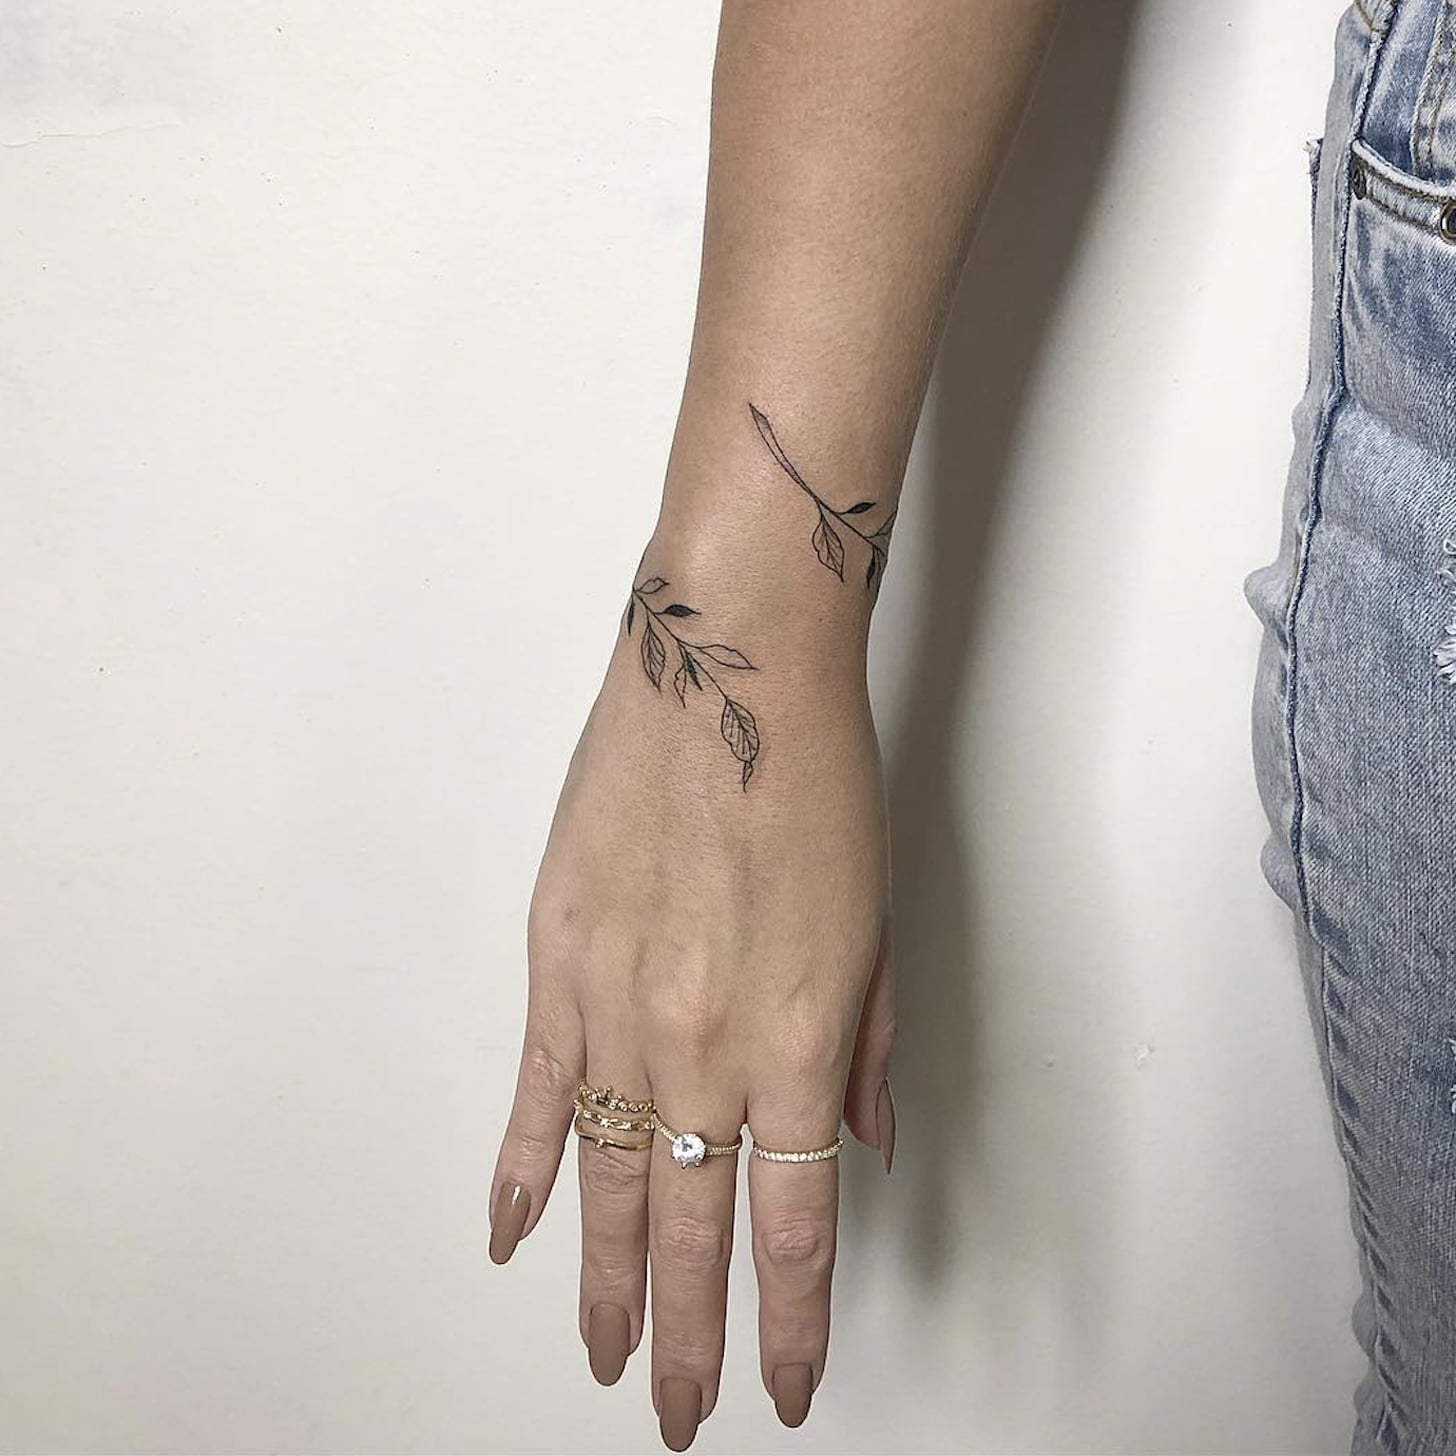 25 minimalist tattoo bracelet ideas for women   Онлайн блог о тату  IdeasTattoo